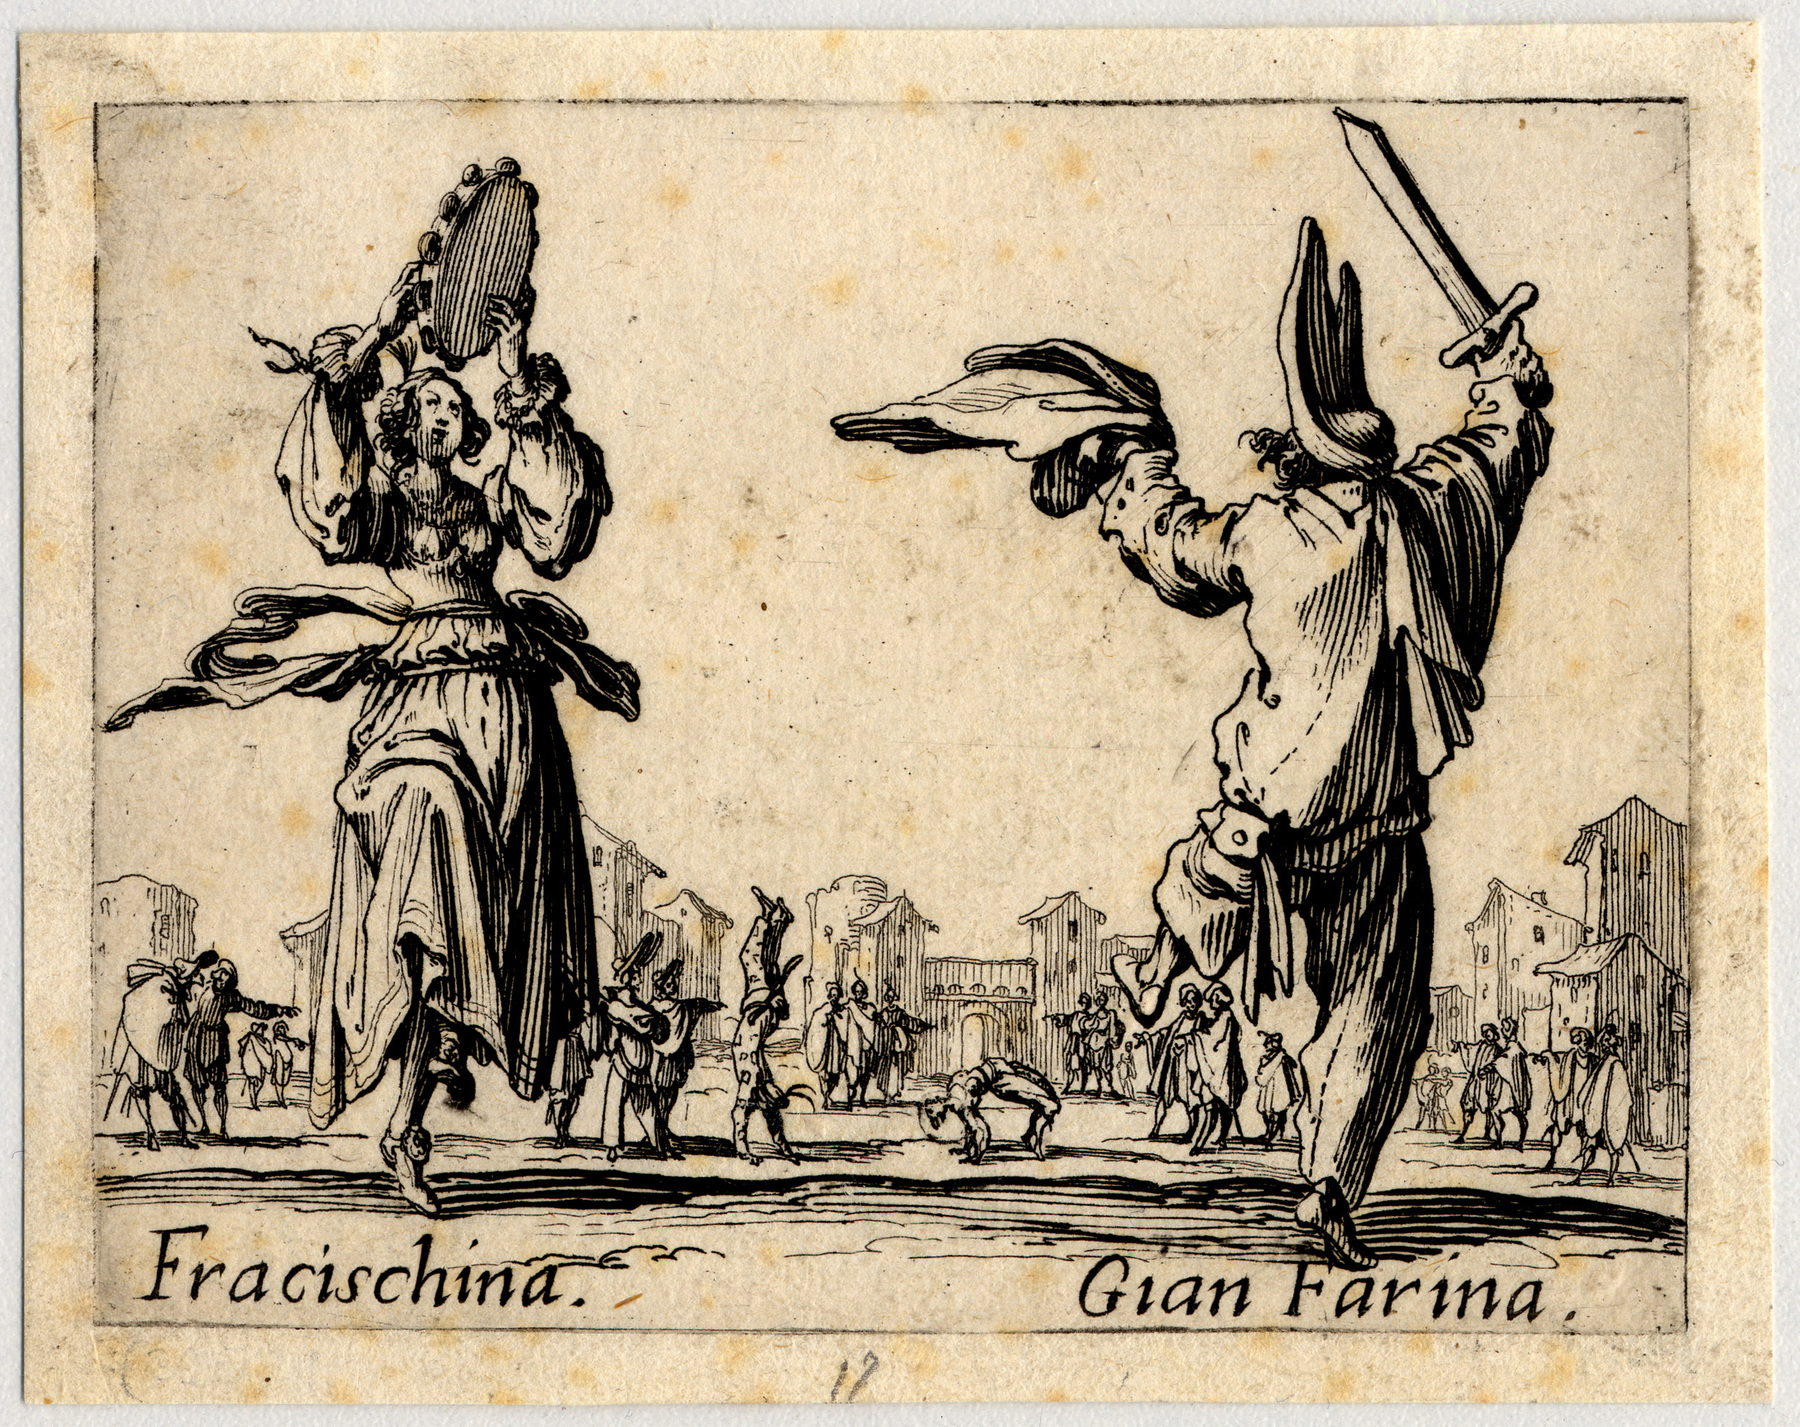 Contenu du Balli di Sfessania : Fracischina, Gian Farina